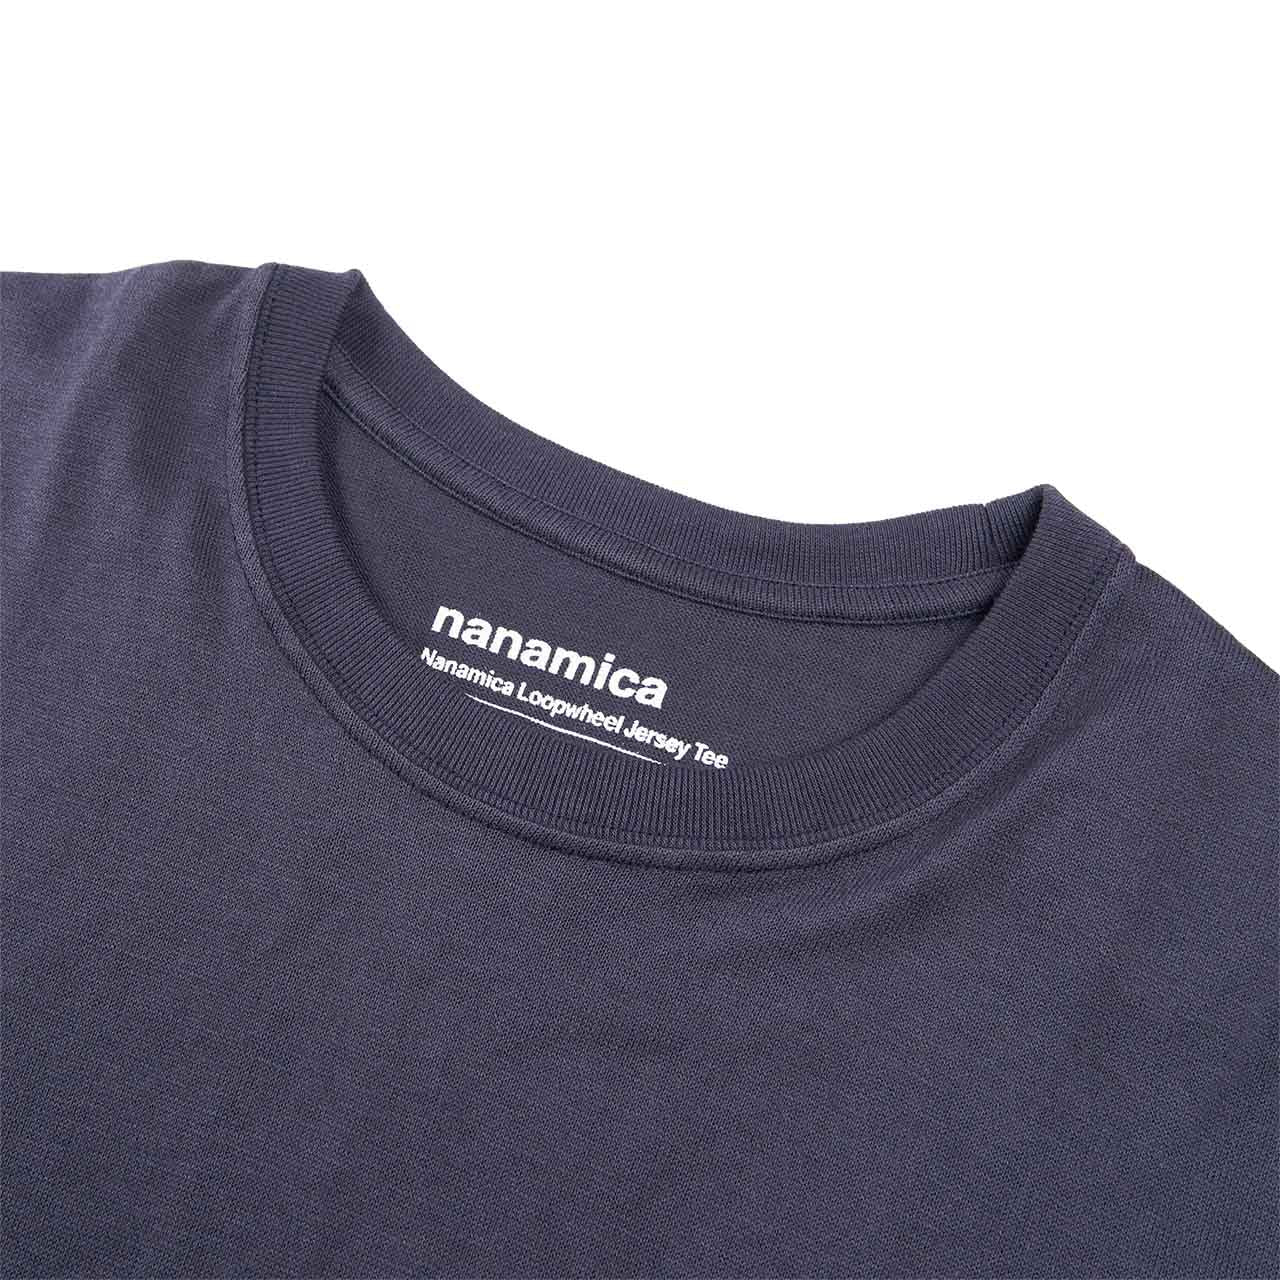 nanamica loopwheel jersey t-shirt (navy)